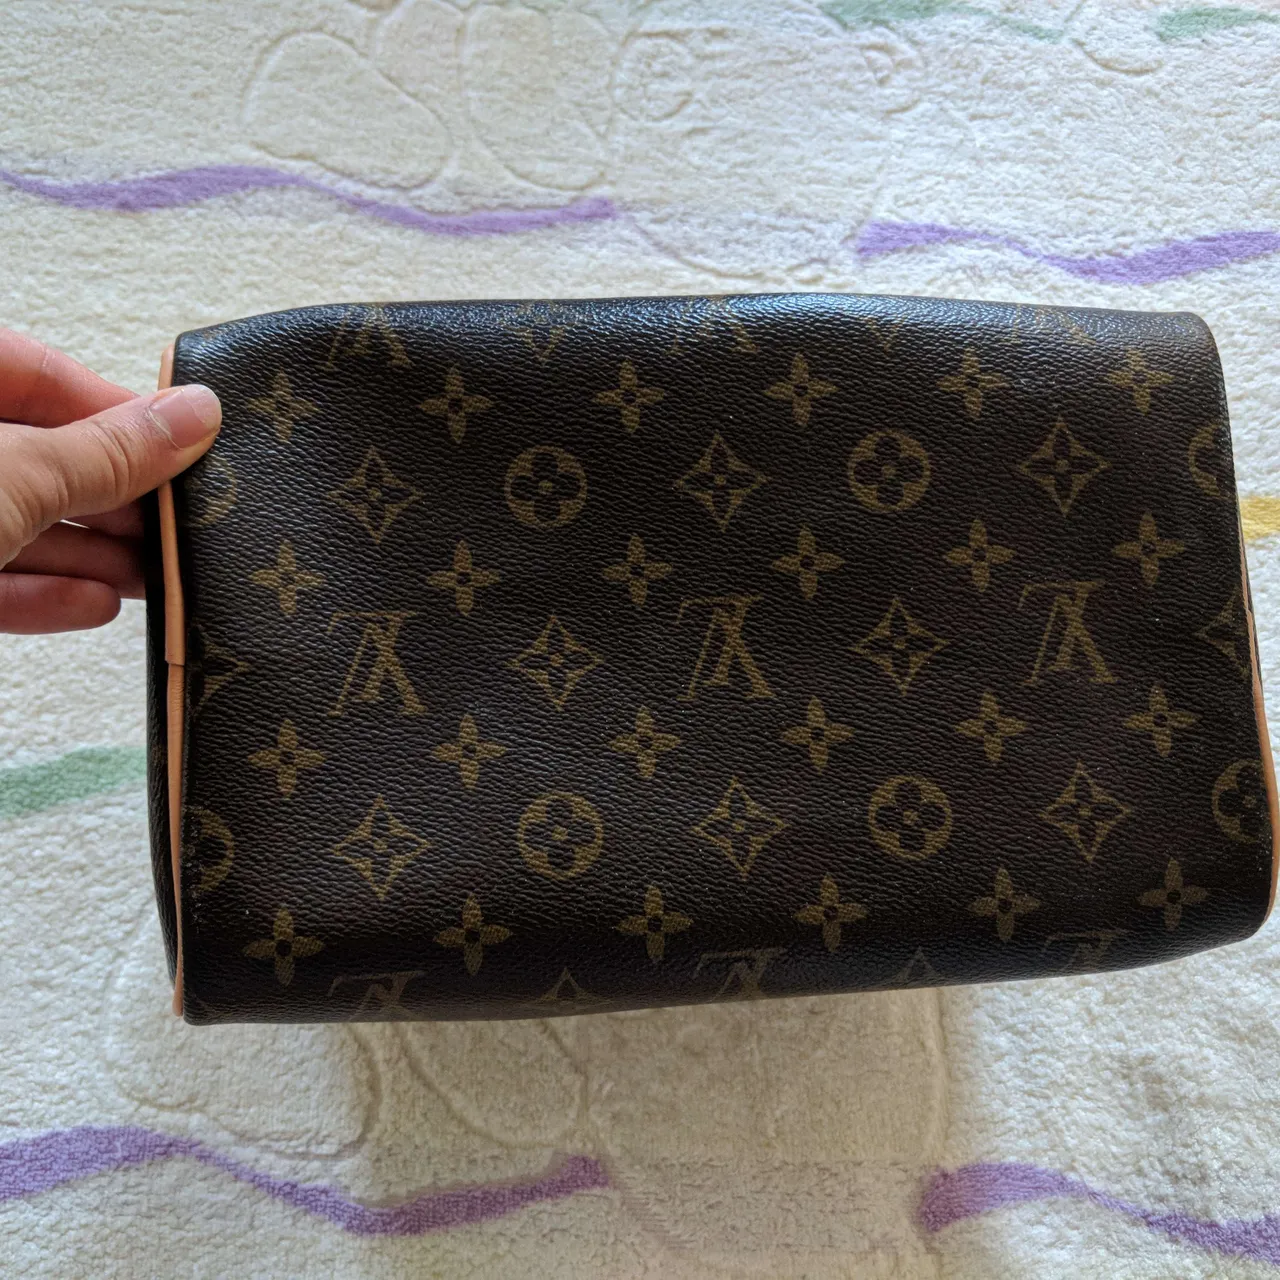 Imitation Louis Vuitton speedy bag in Brown photo 3